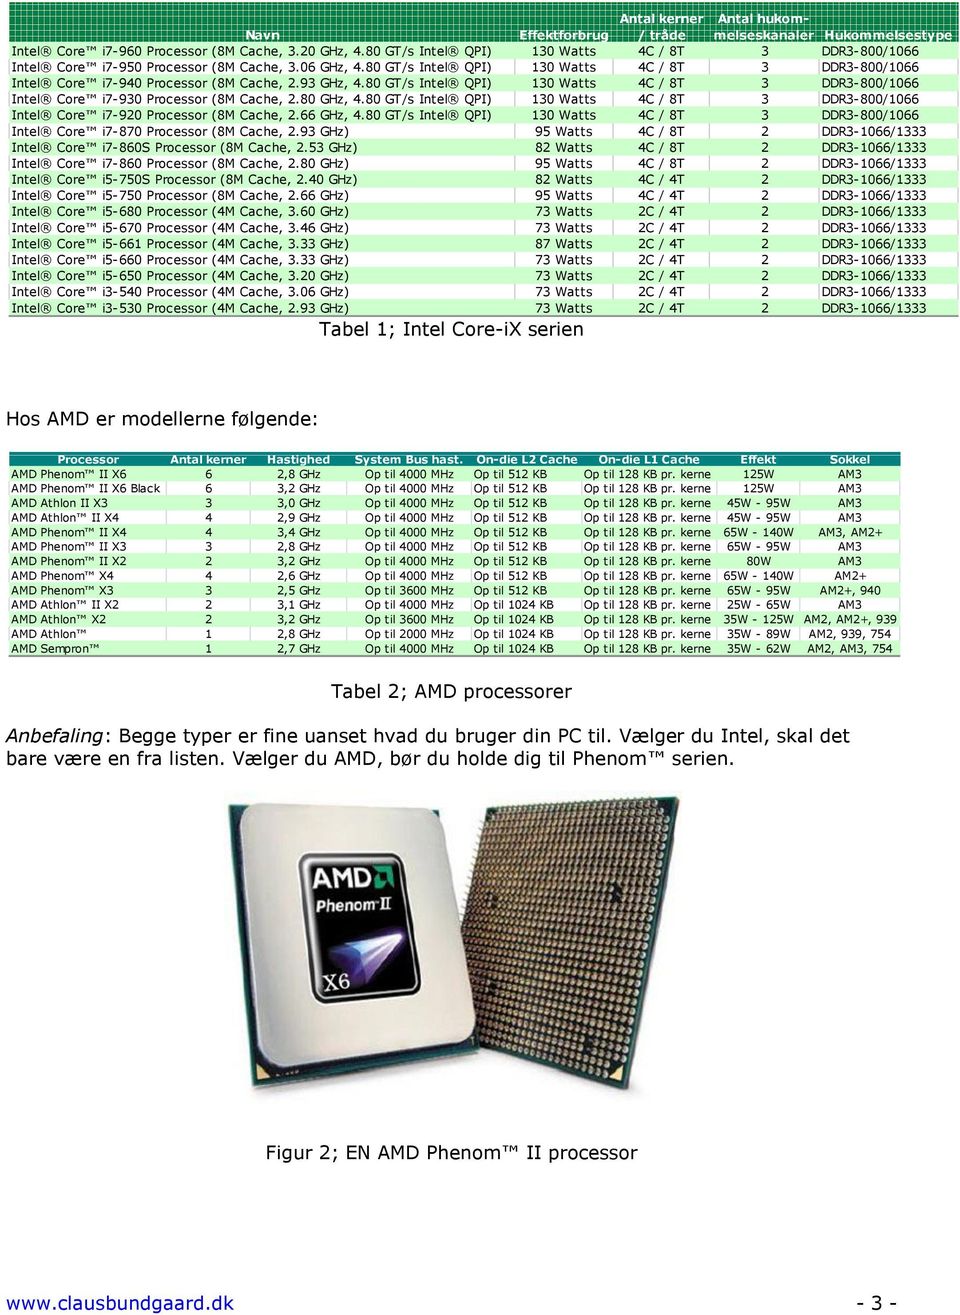 93 GHz, 4.80 GT/s Intel QPI) 130 Watts 4C / 8T 3 DDR3-800/1066 Intel Cre i7-930 Prcessr (8M Cache, 2.80 GHz, 4.